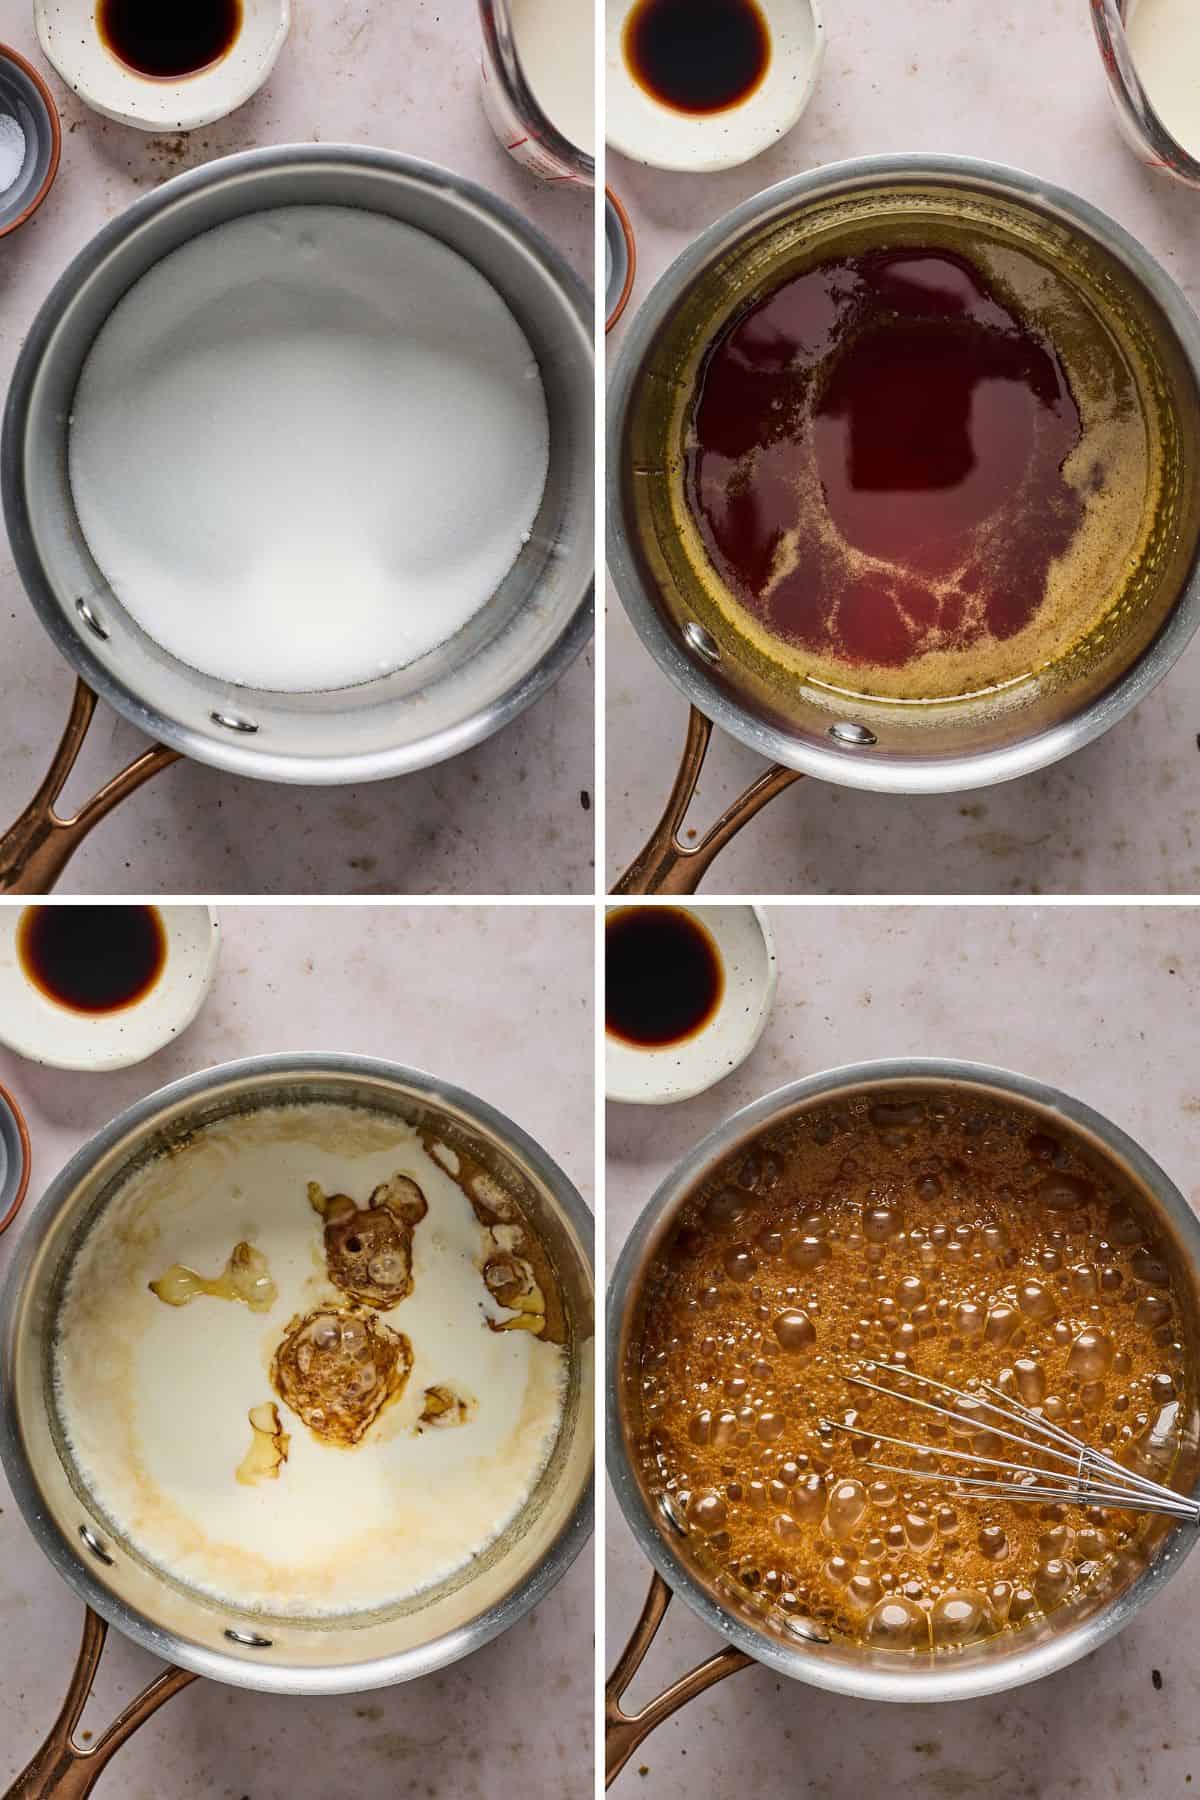 Steps to make caramel swirl for apple pie ice cream